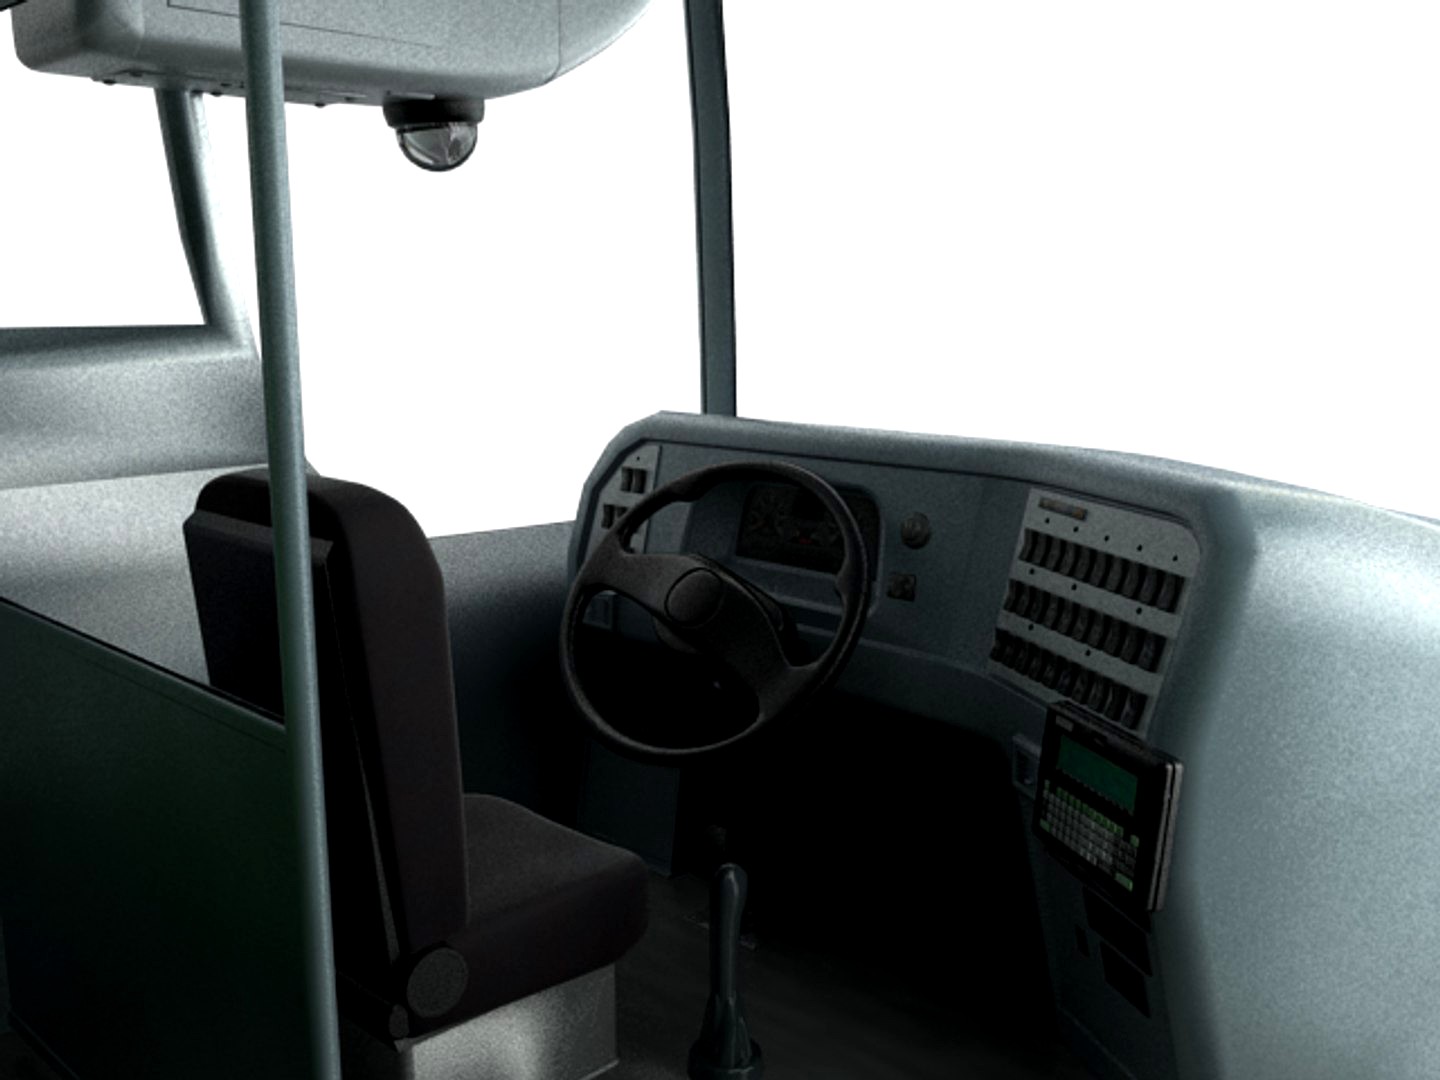 Inside a bus